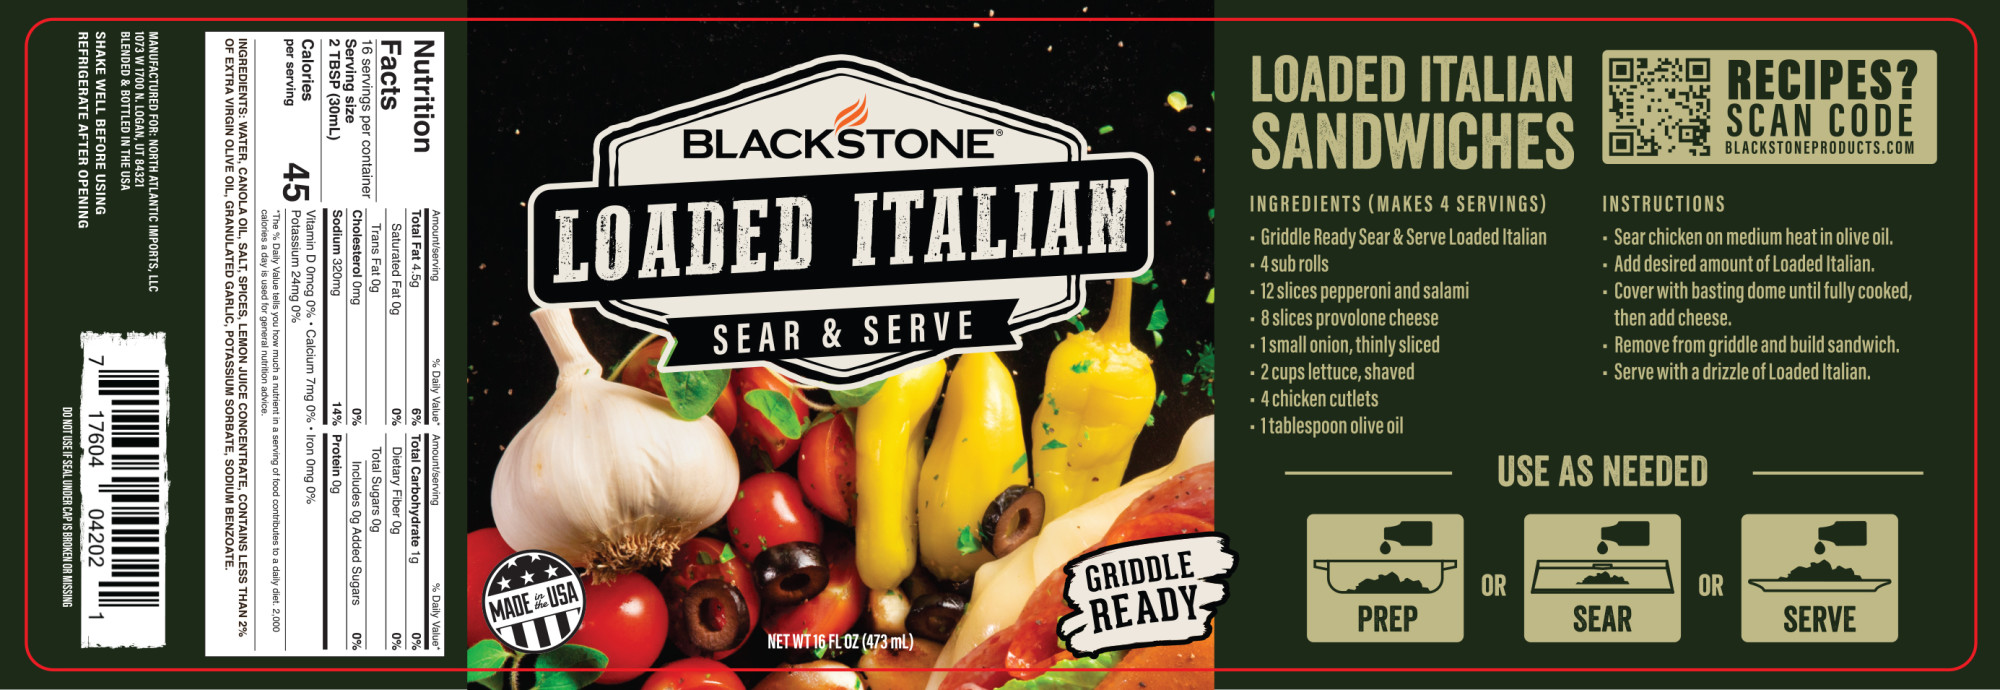 Blackstone Loaded Italian Sauce - image 5 of 9